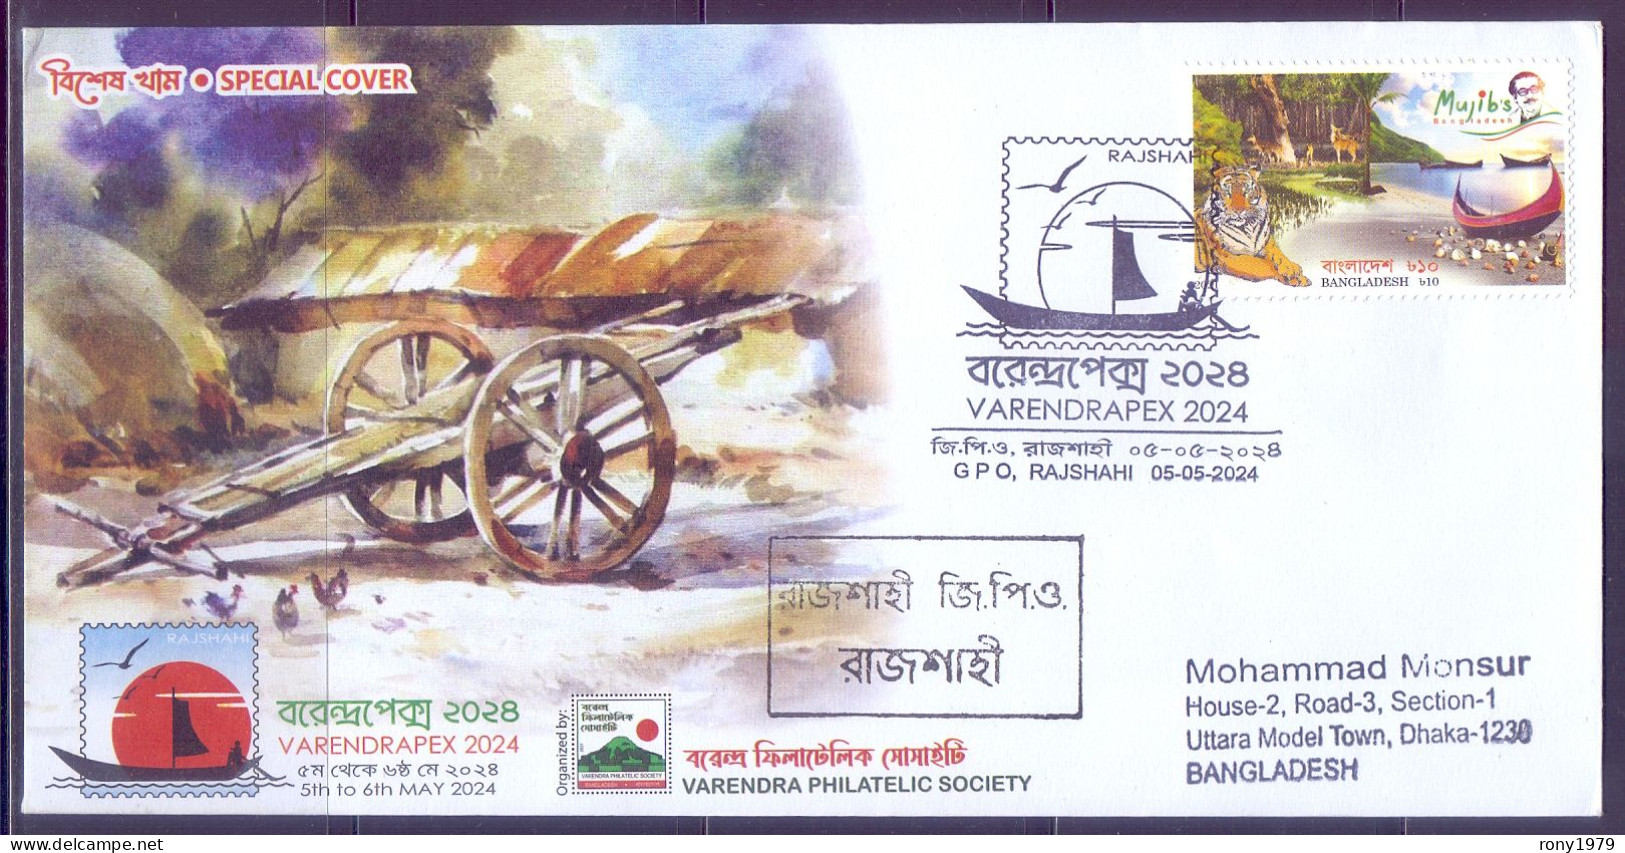 Bangladesh 2024 Varendrapex Stamp Exhibition Wheelbarrow Rooster Village Hut Sail Boat REG Special Cover Pictorial PM-1 - Expositions Philatéliques